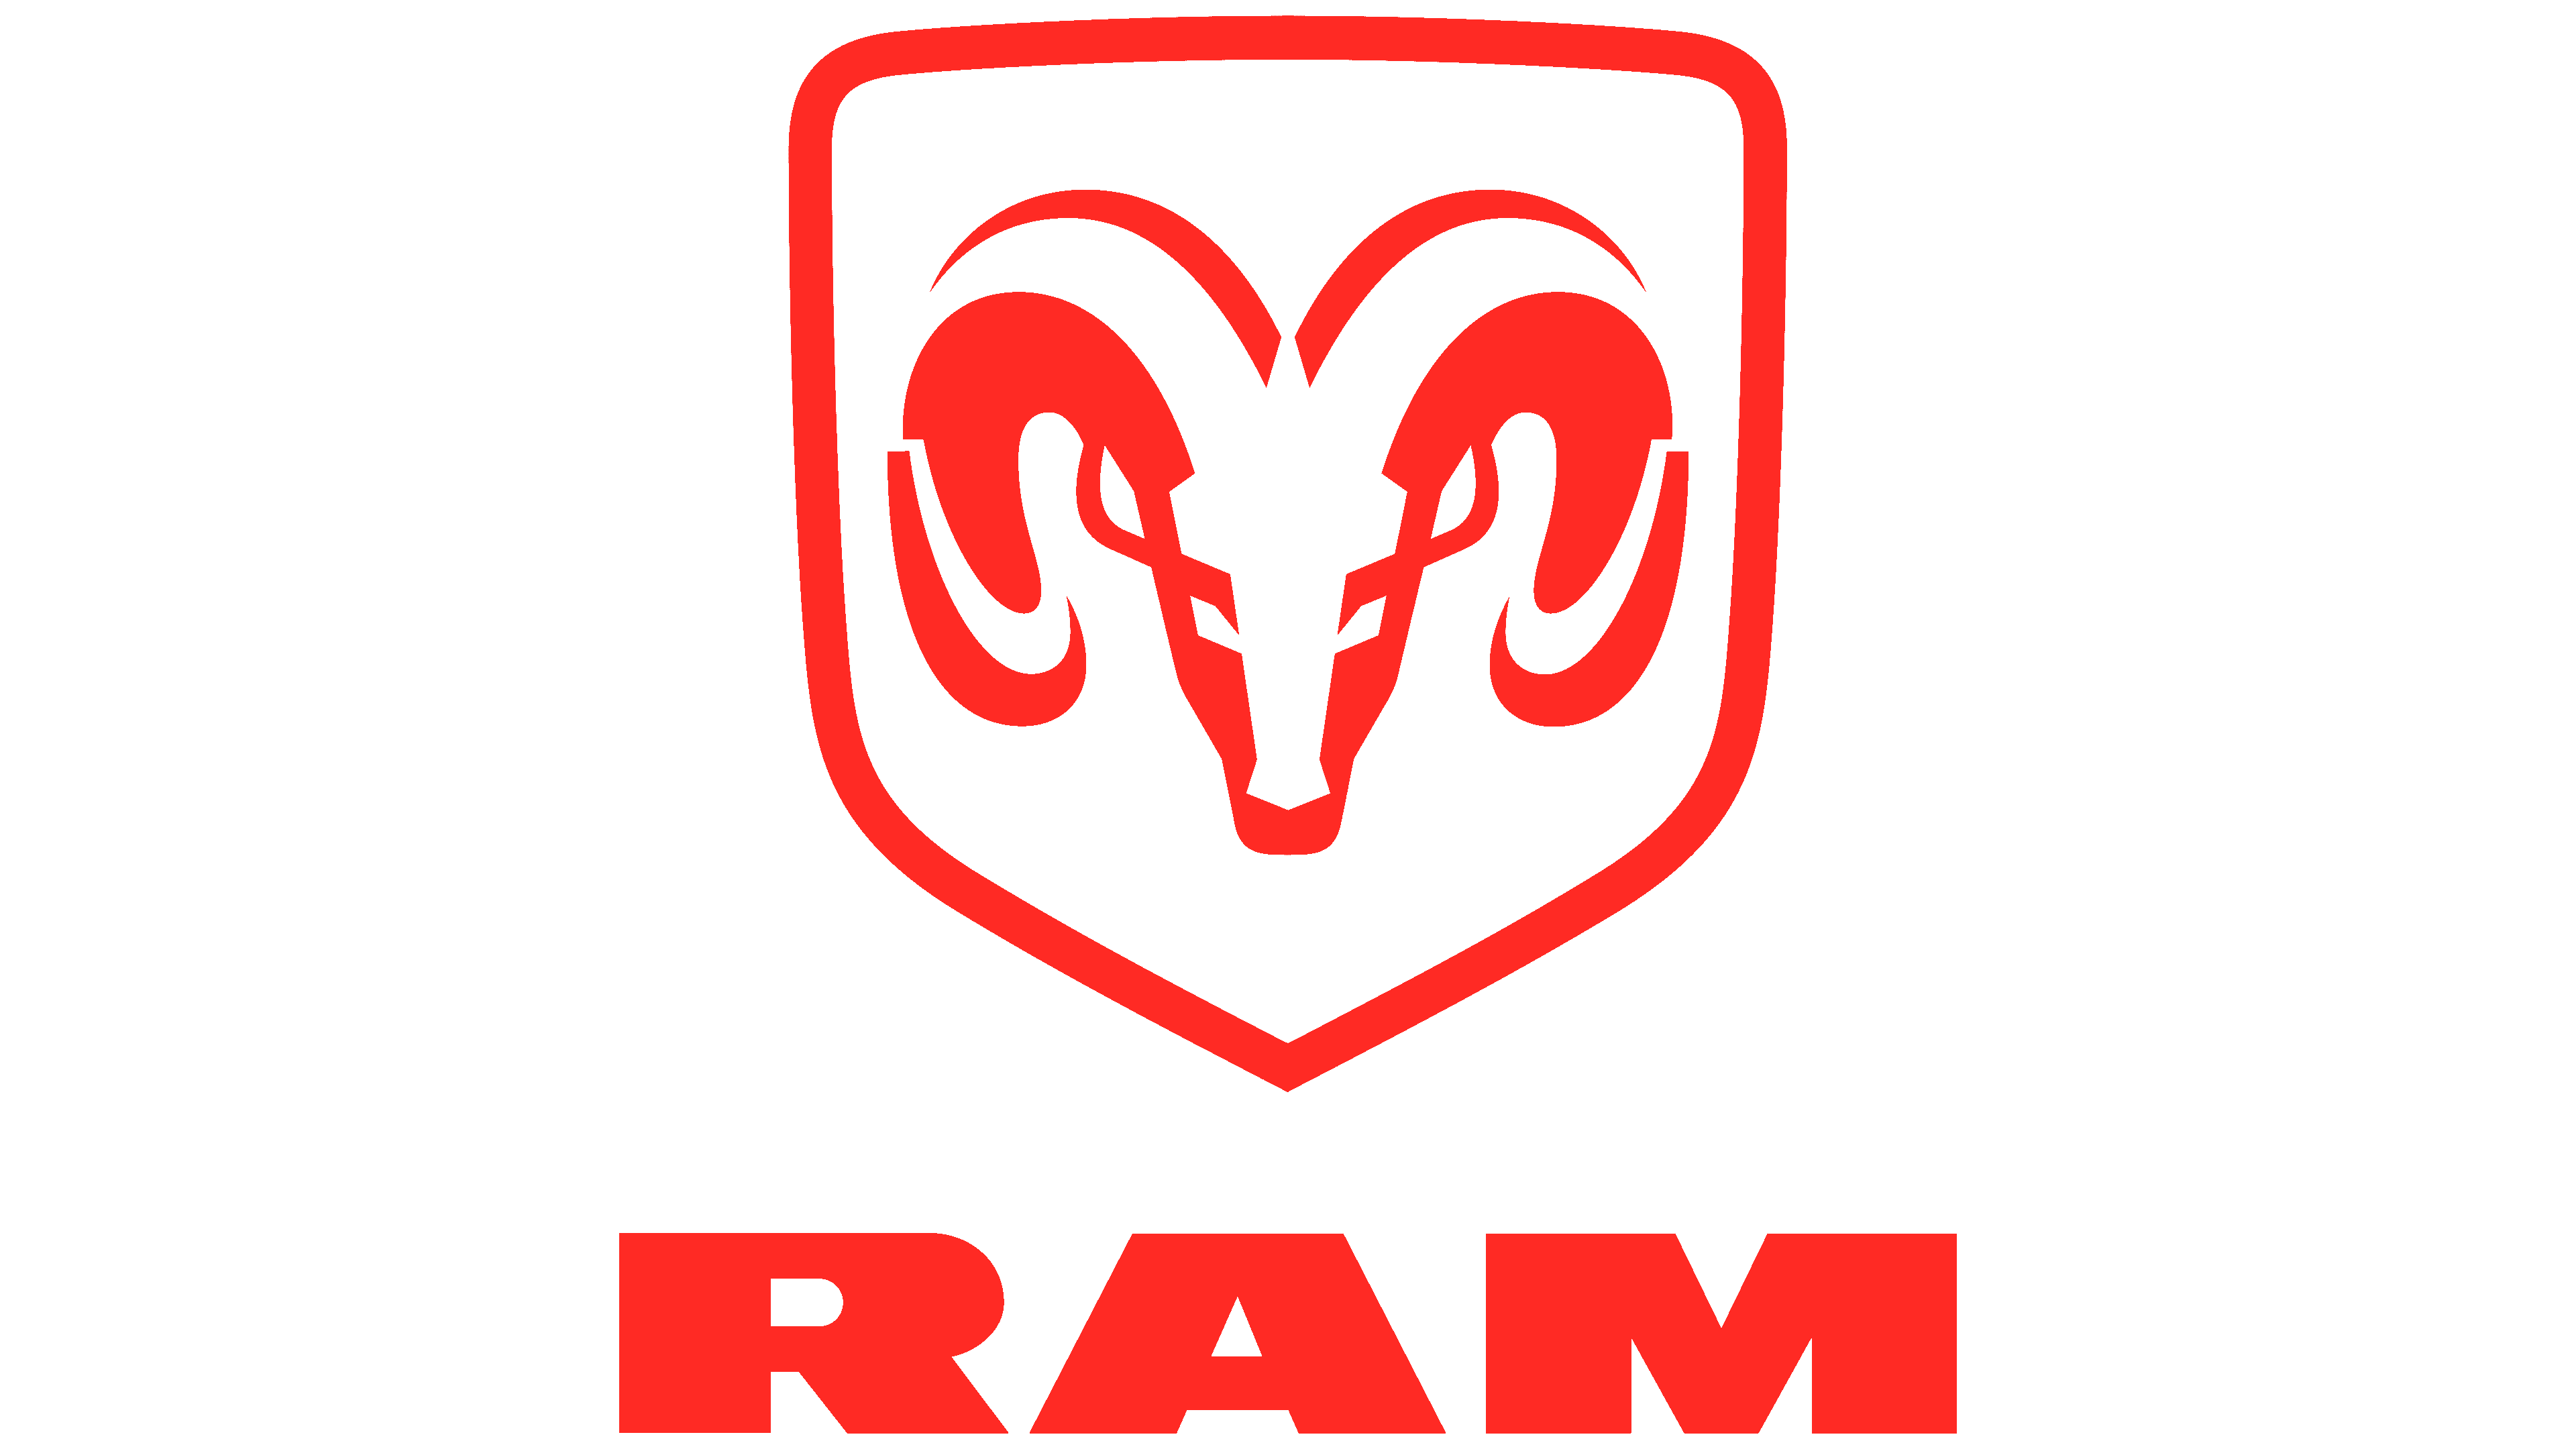 Dodge Ram Logo, symbol, meaning, history, PNG, brand